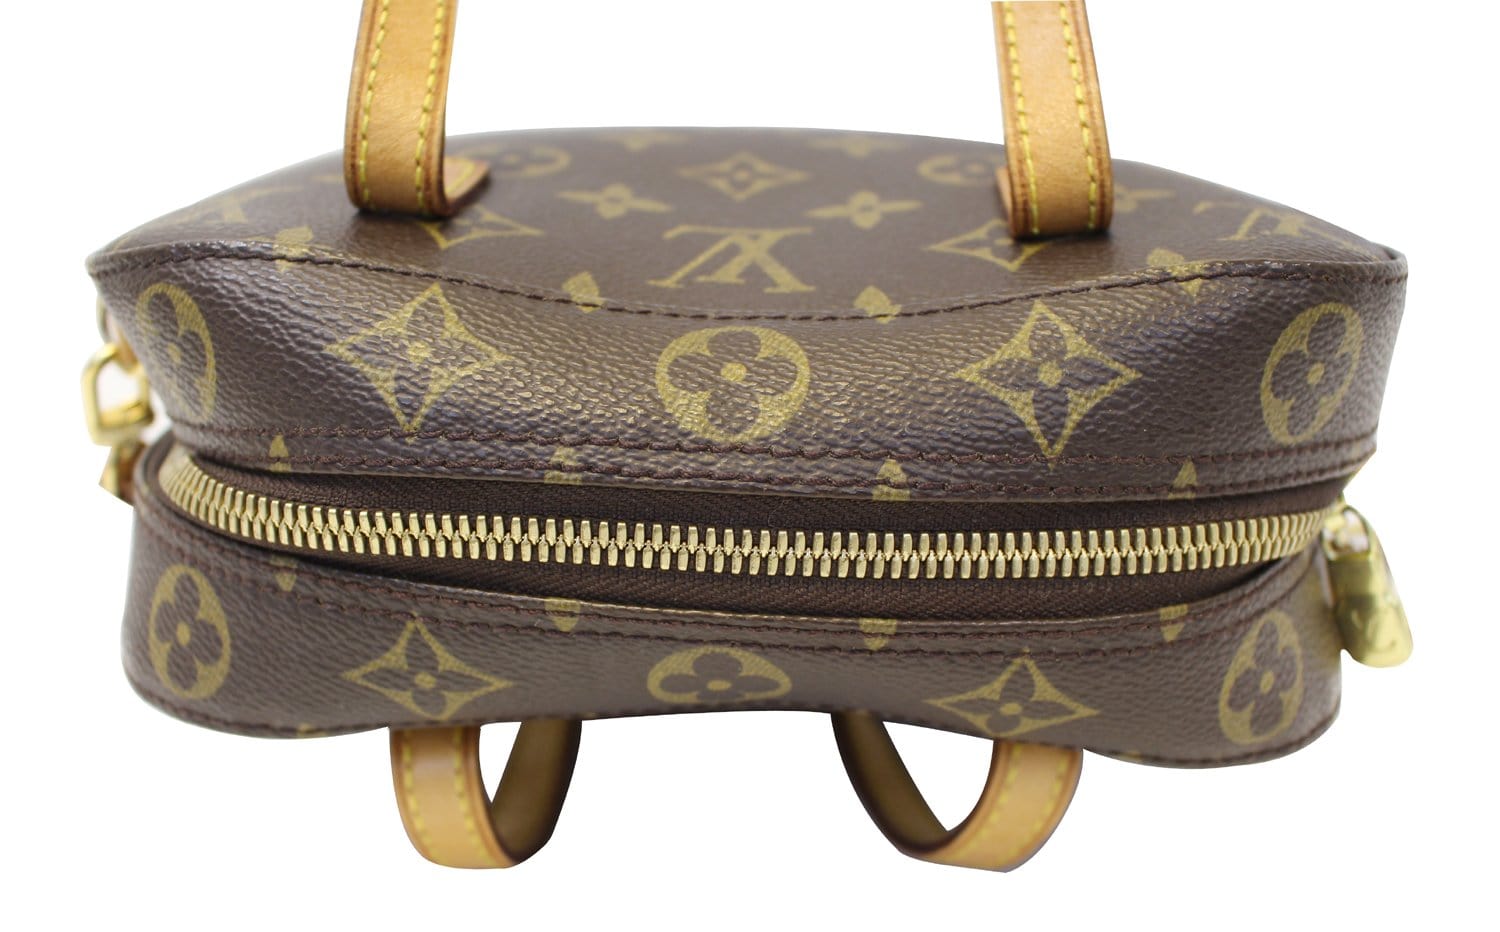 Louis Vuitton Spontini Monogram Top Handle Bag on SALE